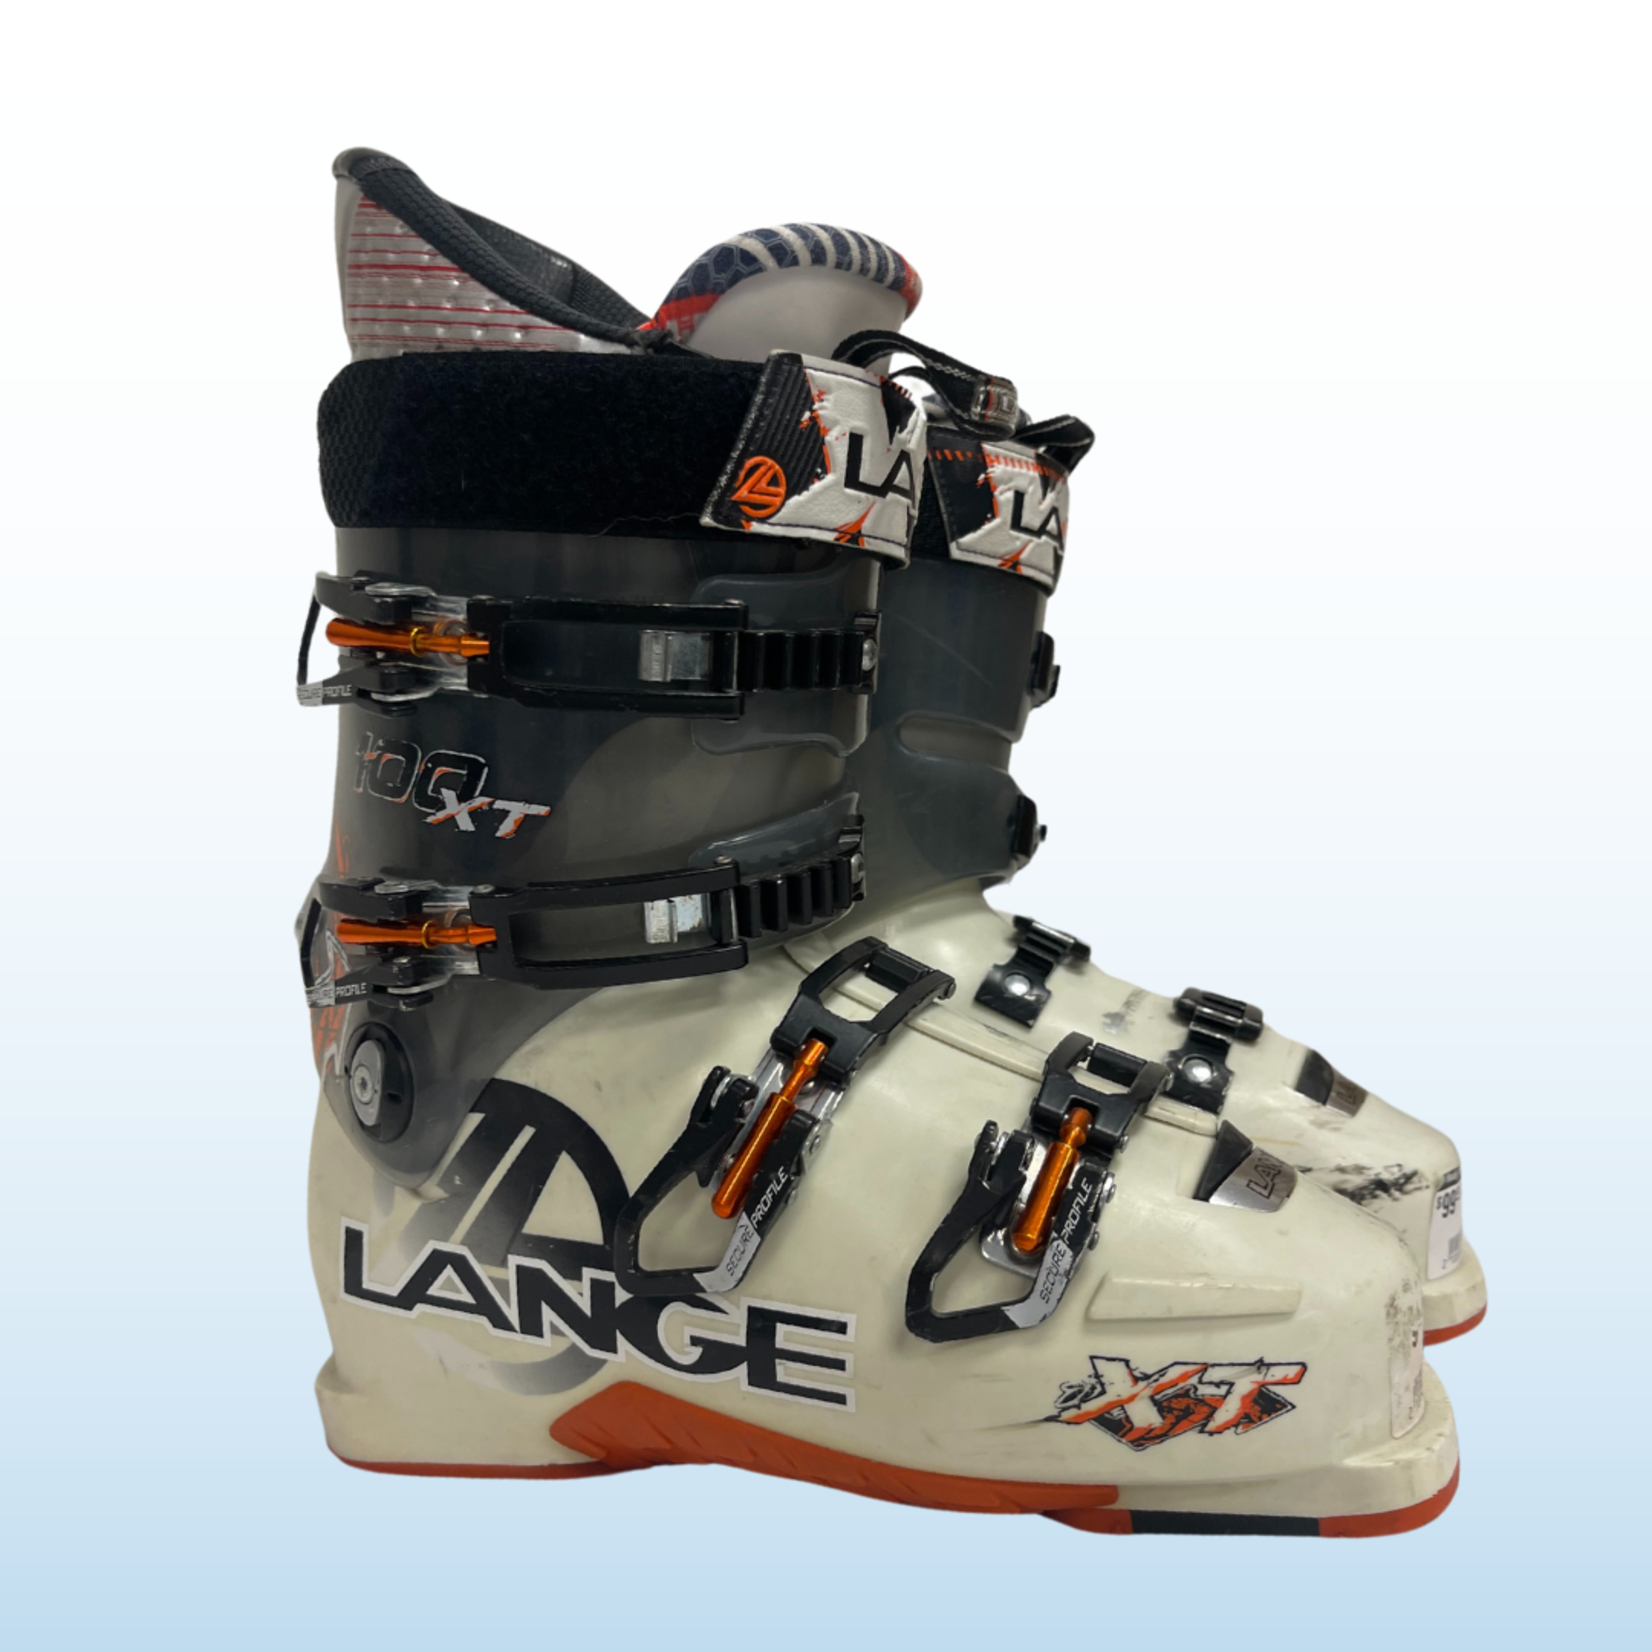 Lange Lange 100 XT Ski Boots, Size 26.5